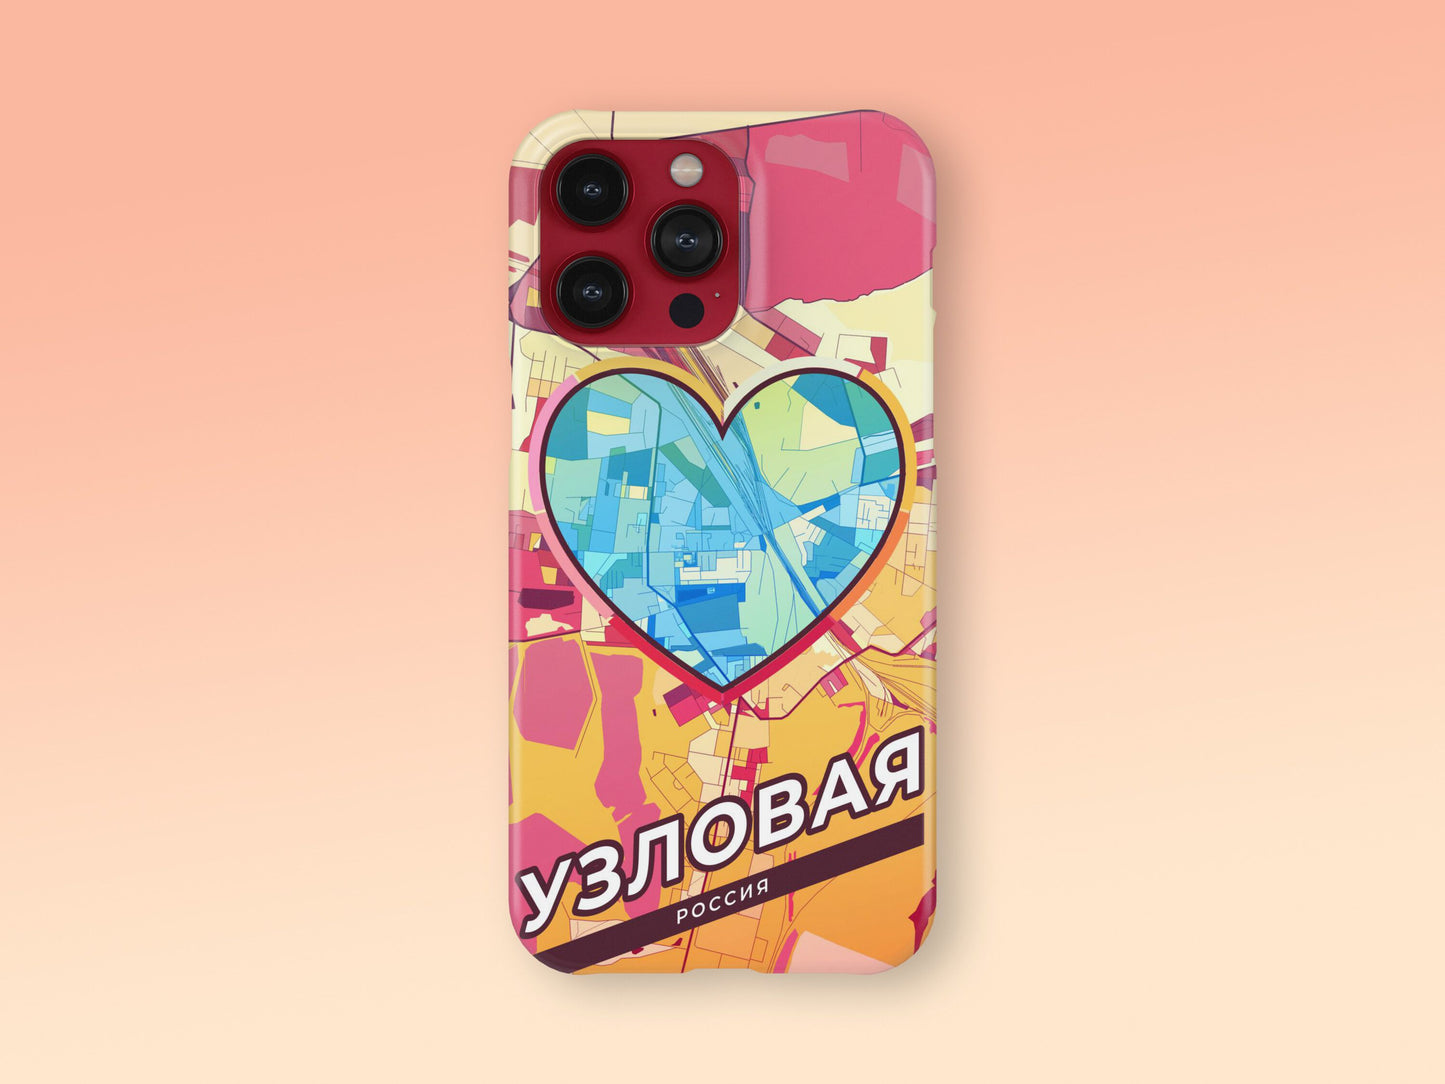 Uzlovaya Russia slim phone case with colorful icon 2